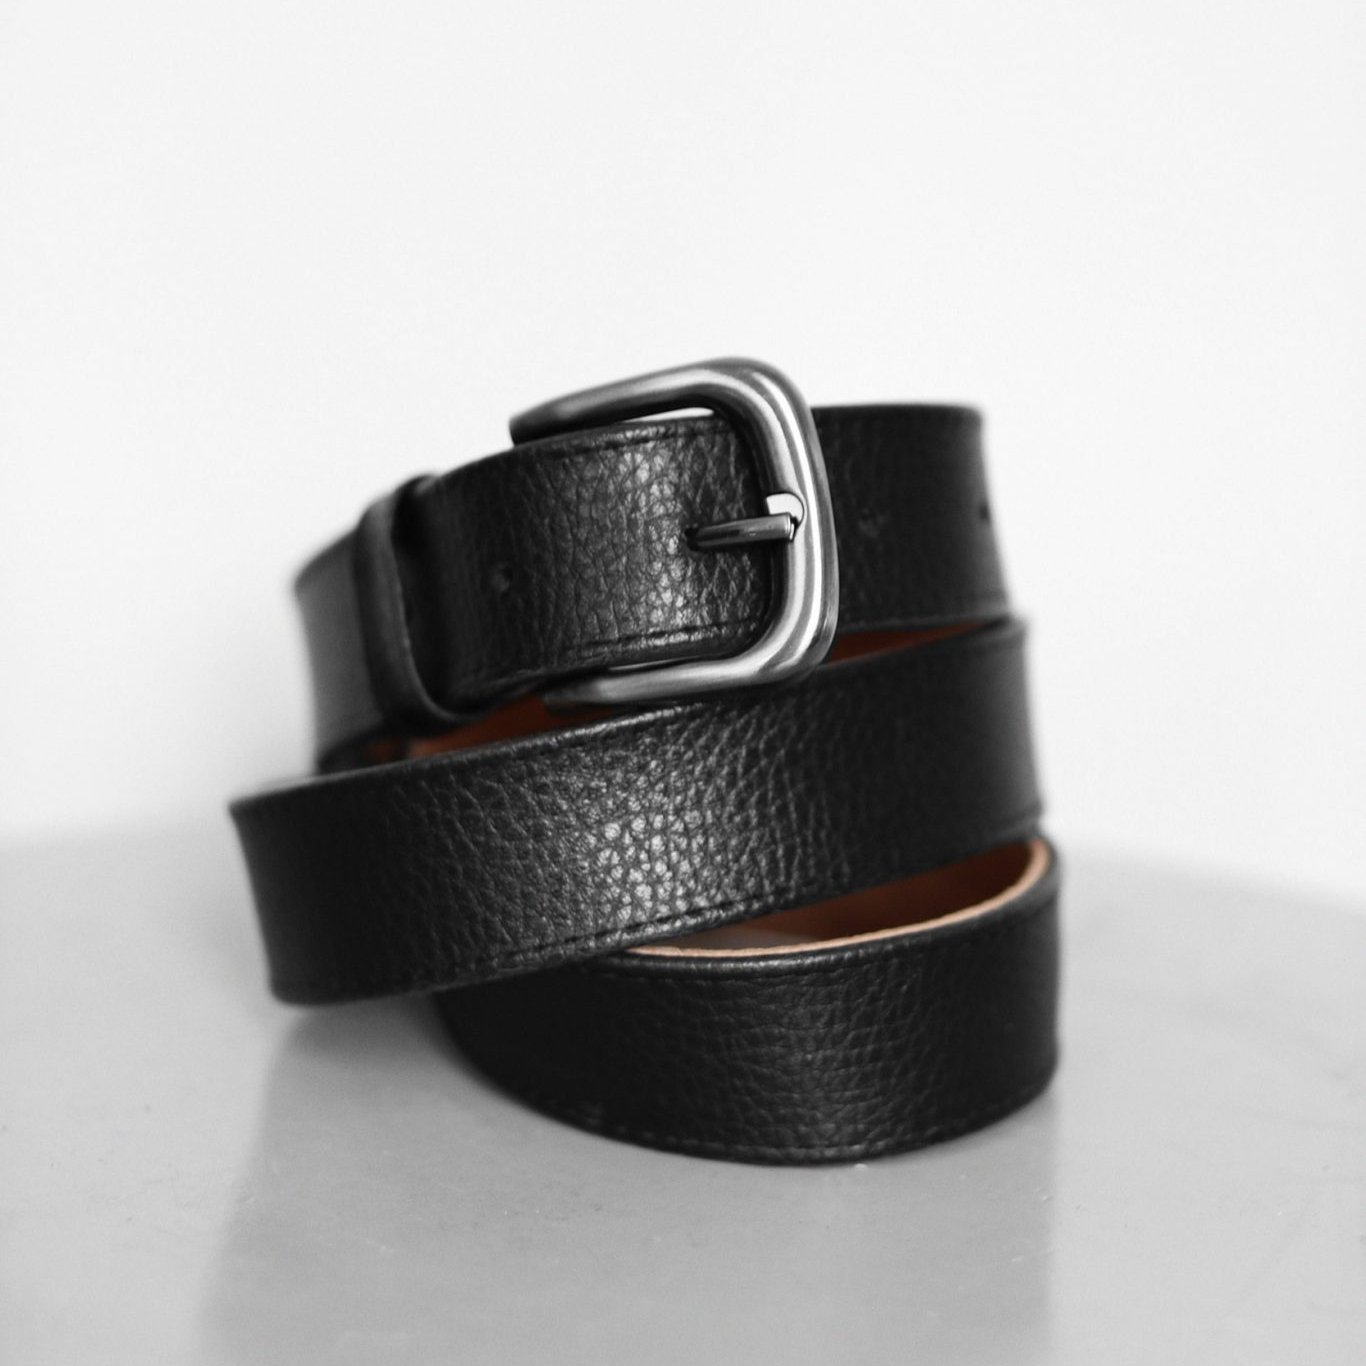 A vegan leather belt